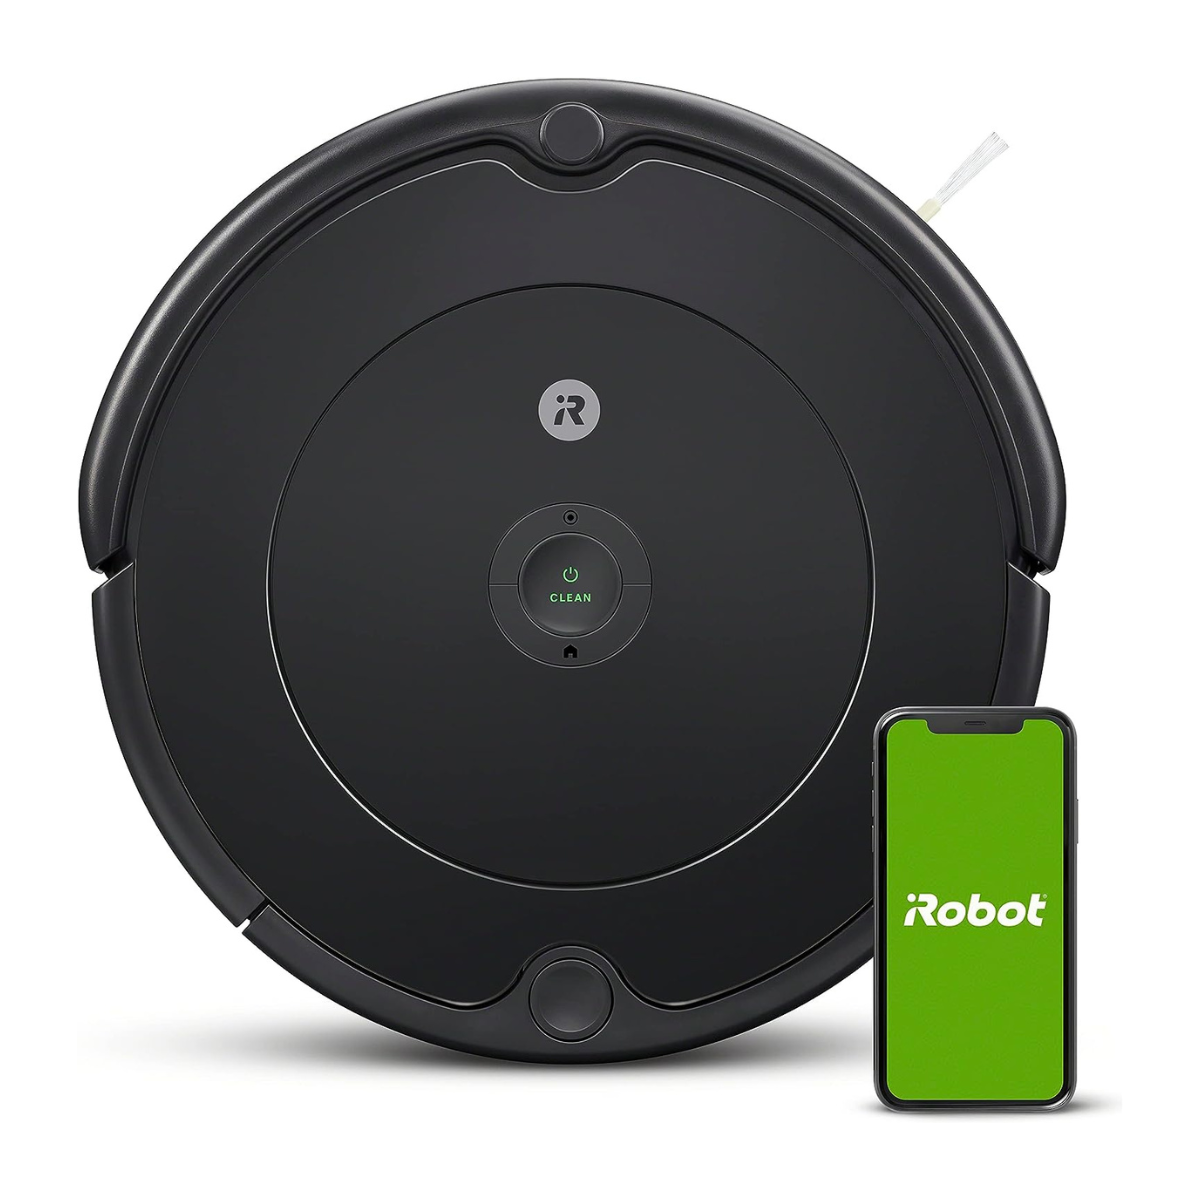 The iRobot Roomba 694 Robot Vacuum with phone standing next to it